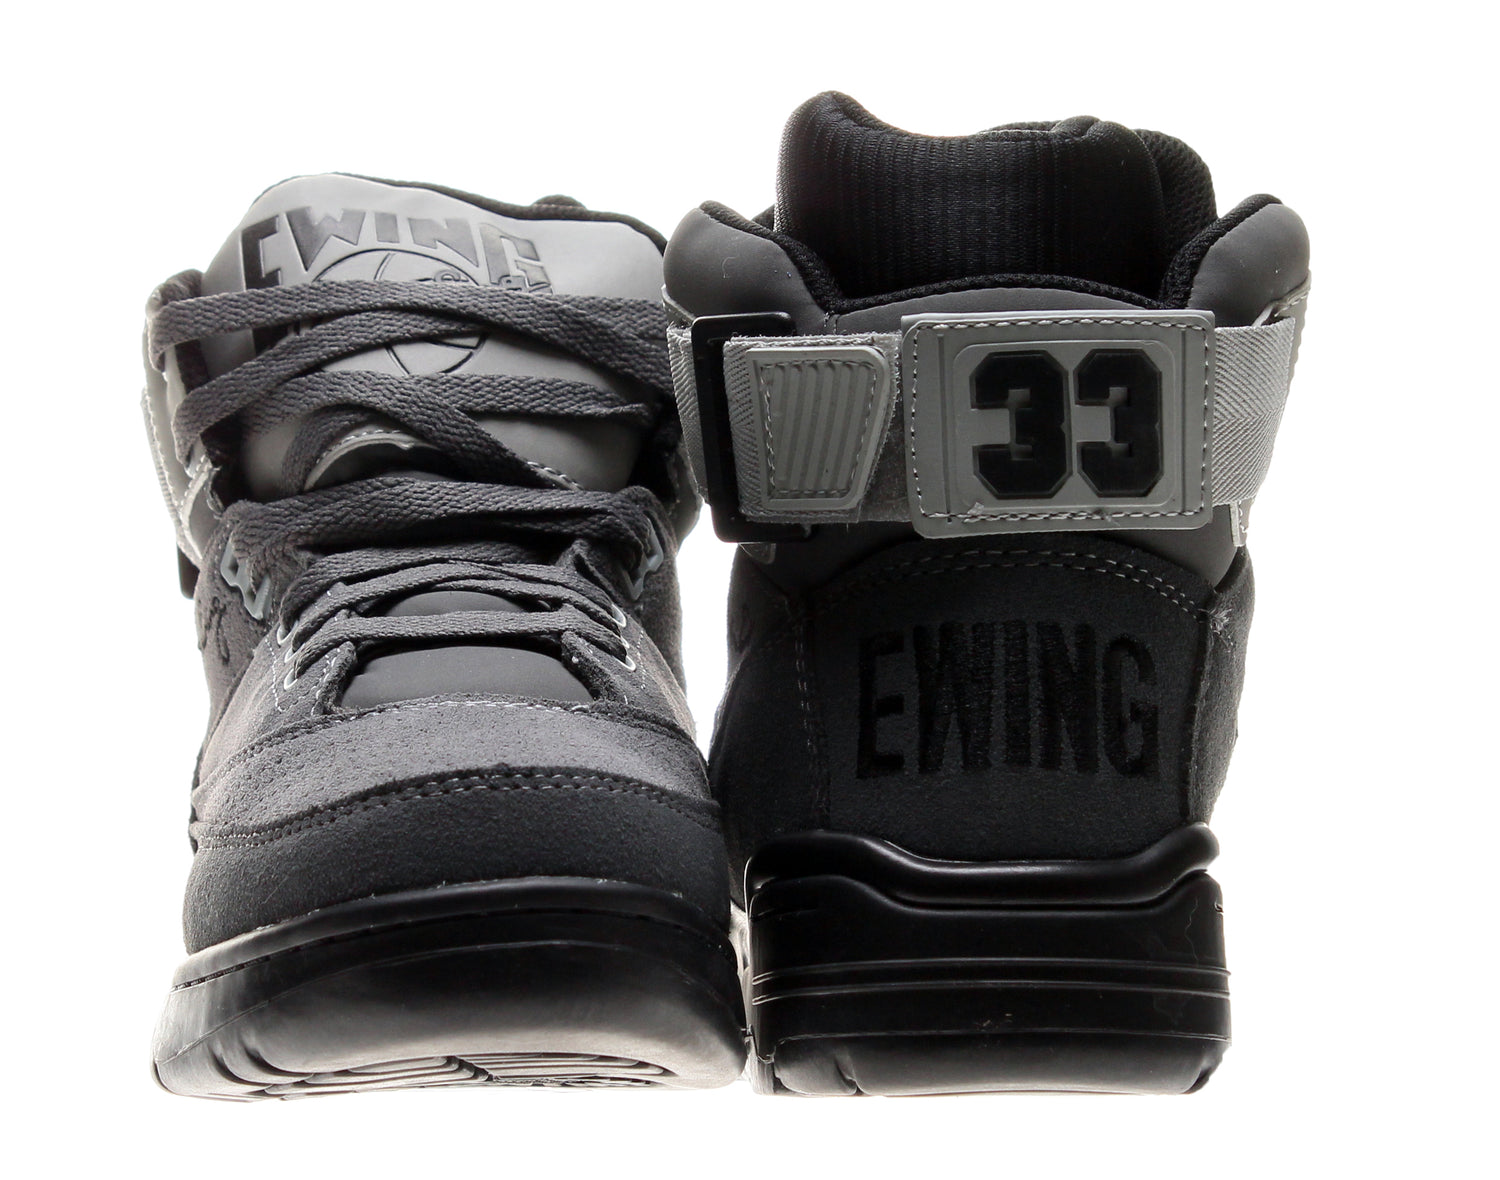 Ewing Athletics Ewing 33 Hi Men's Basketball Shoes